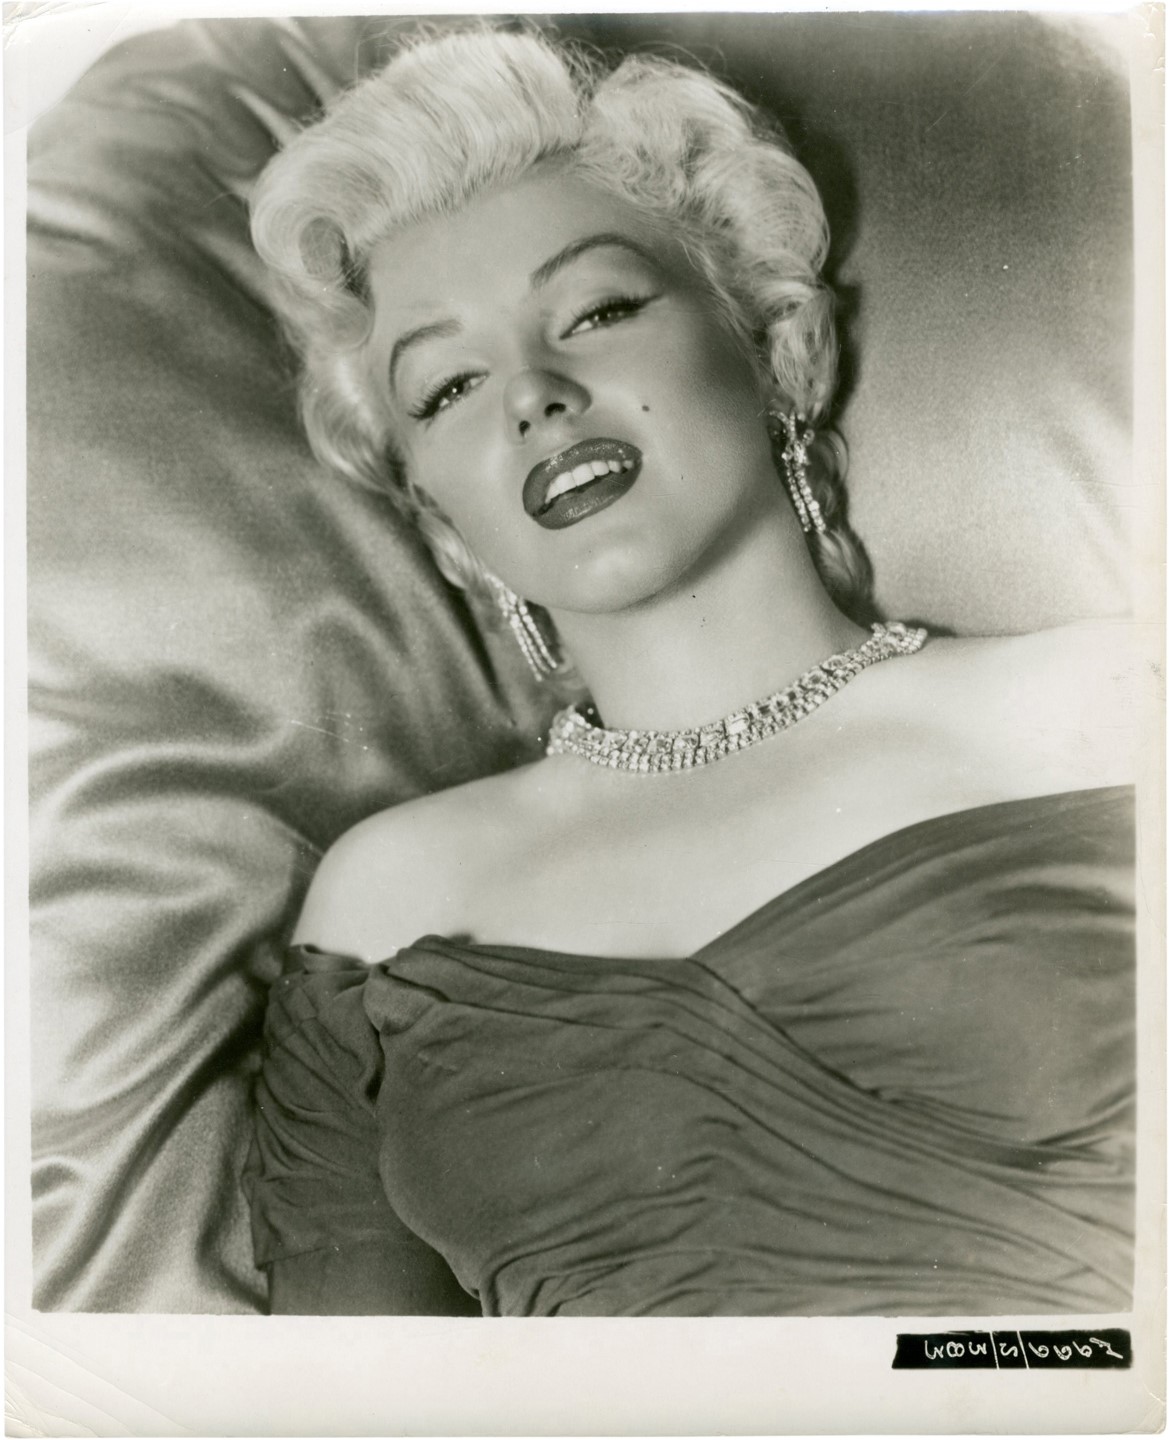 - Stunning Marilyn Monroe Photograph (PSA Type I)